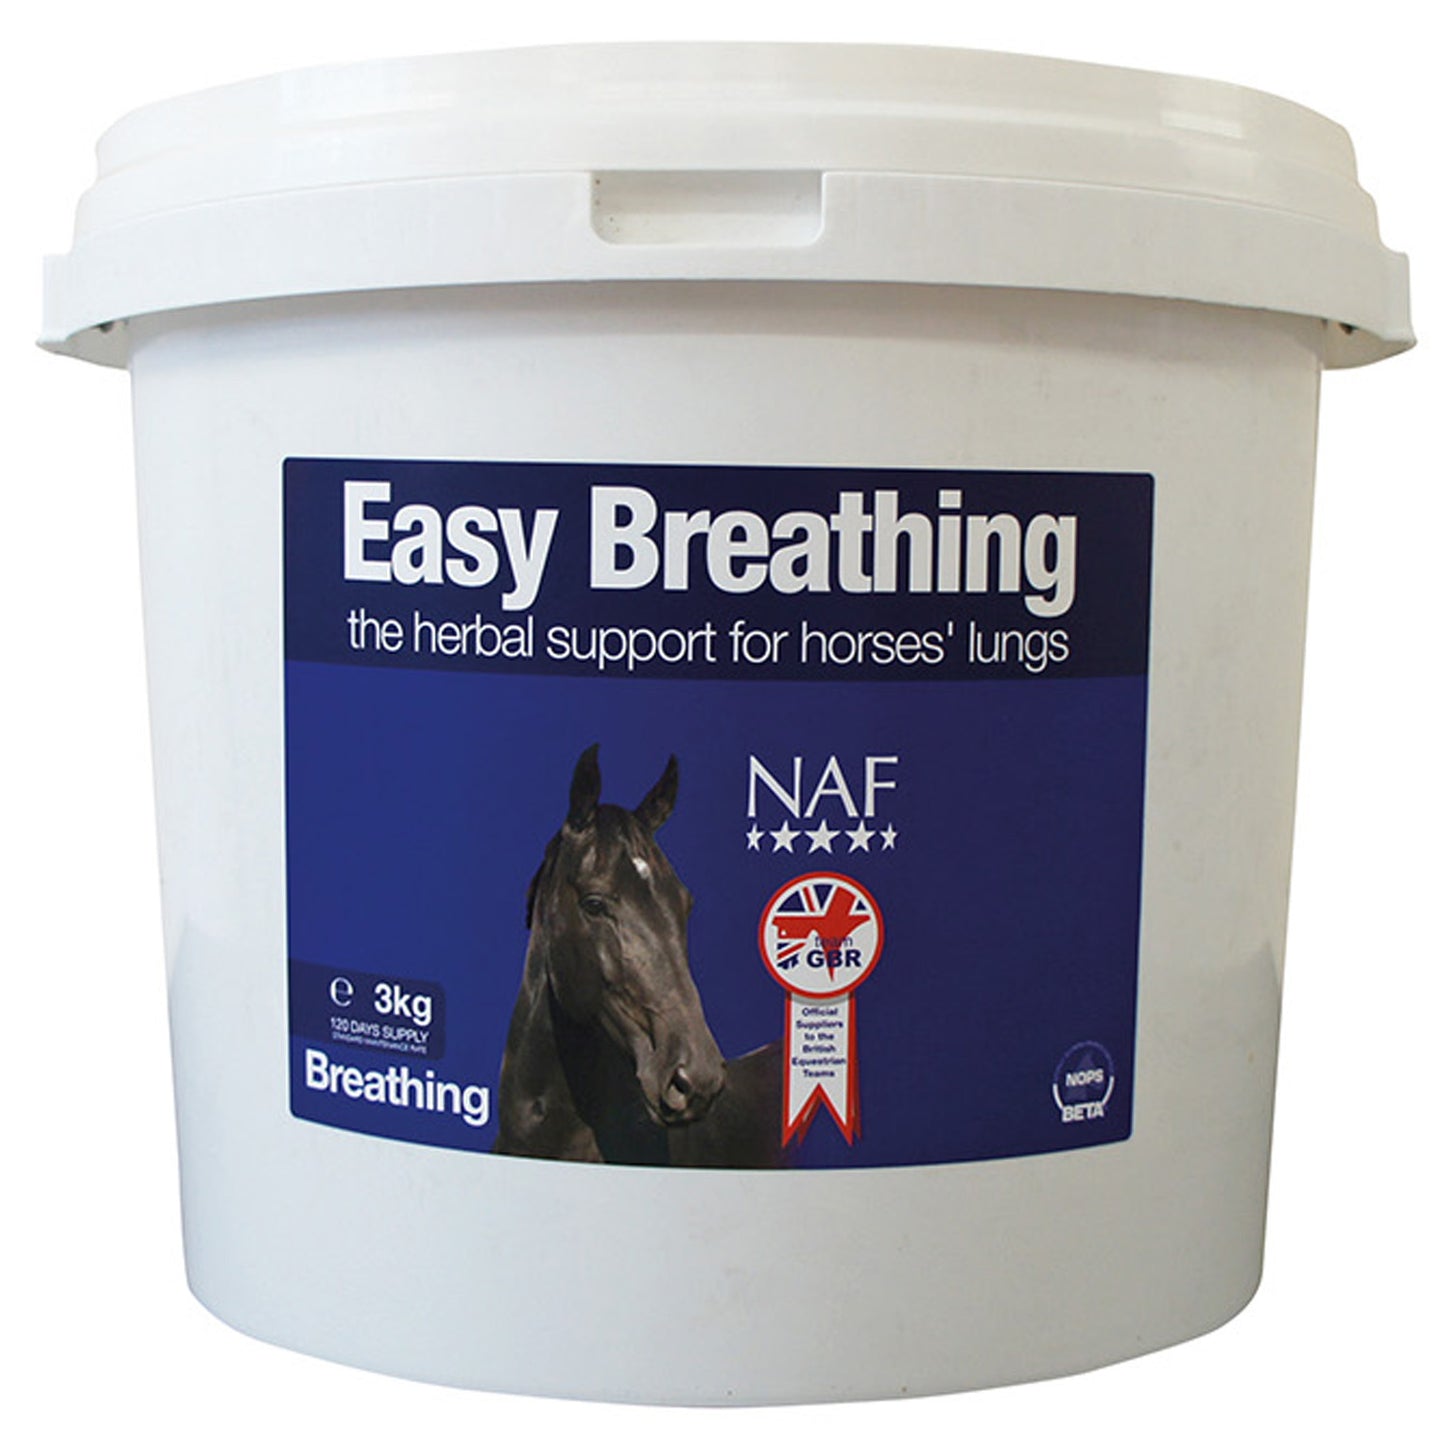 NAF EASY BREATHING